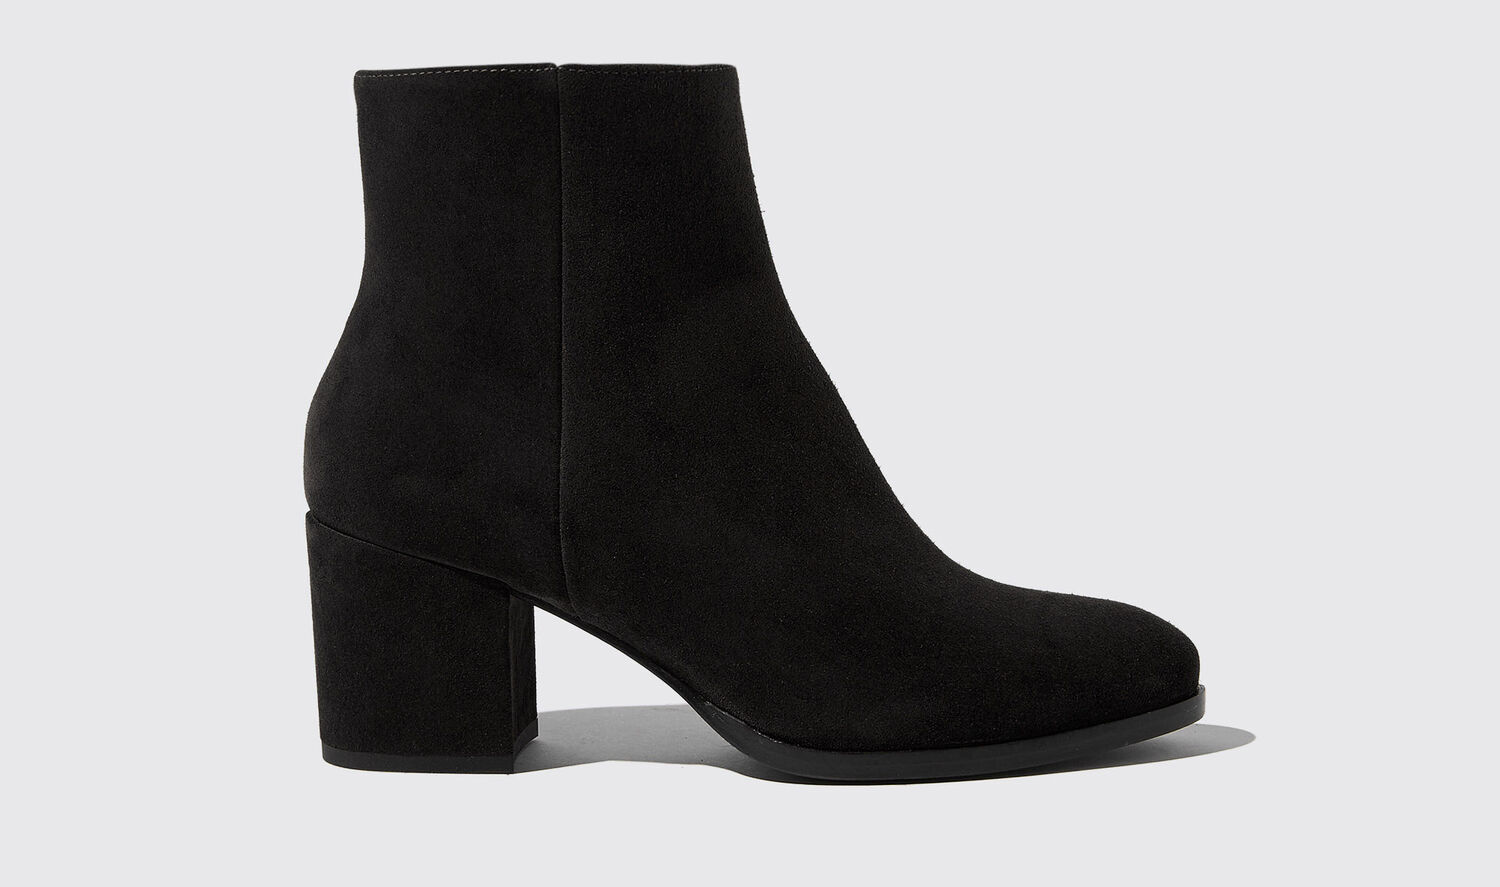 Scarosso Boots Costanza Nera Scamosciata Suede Leather In Black - Suede